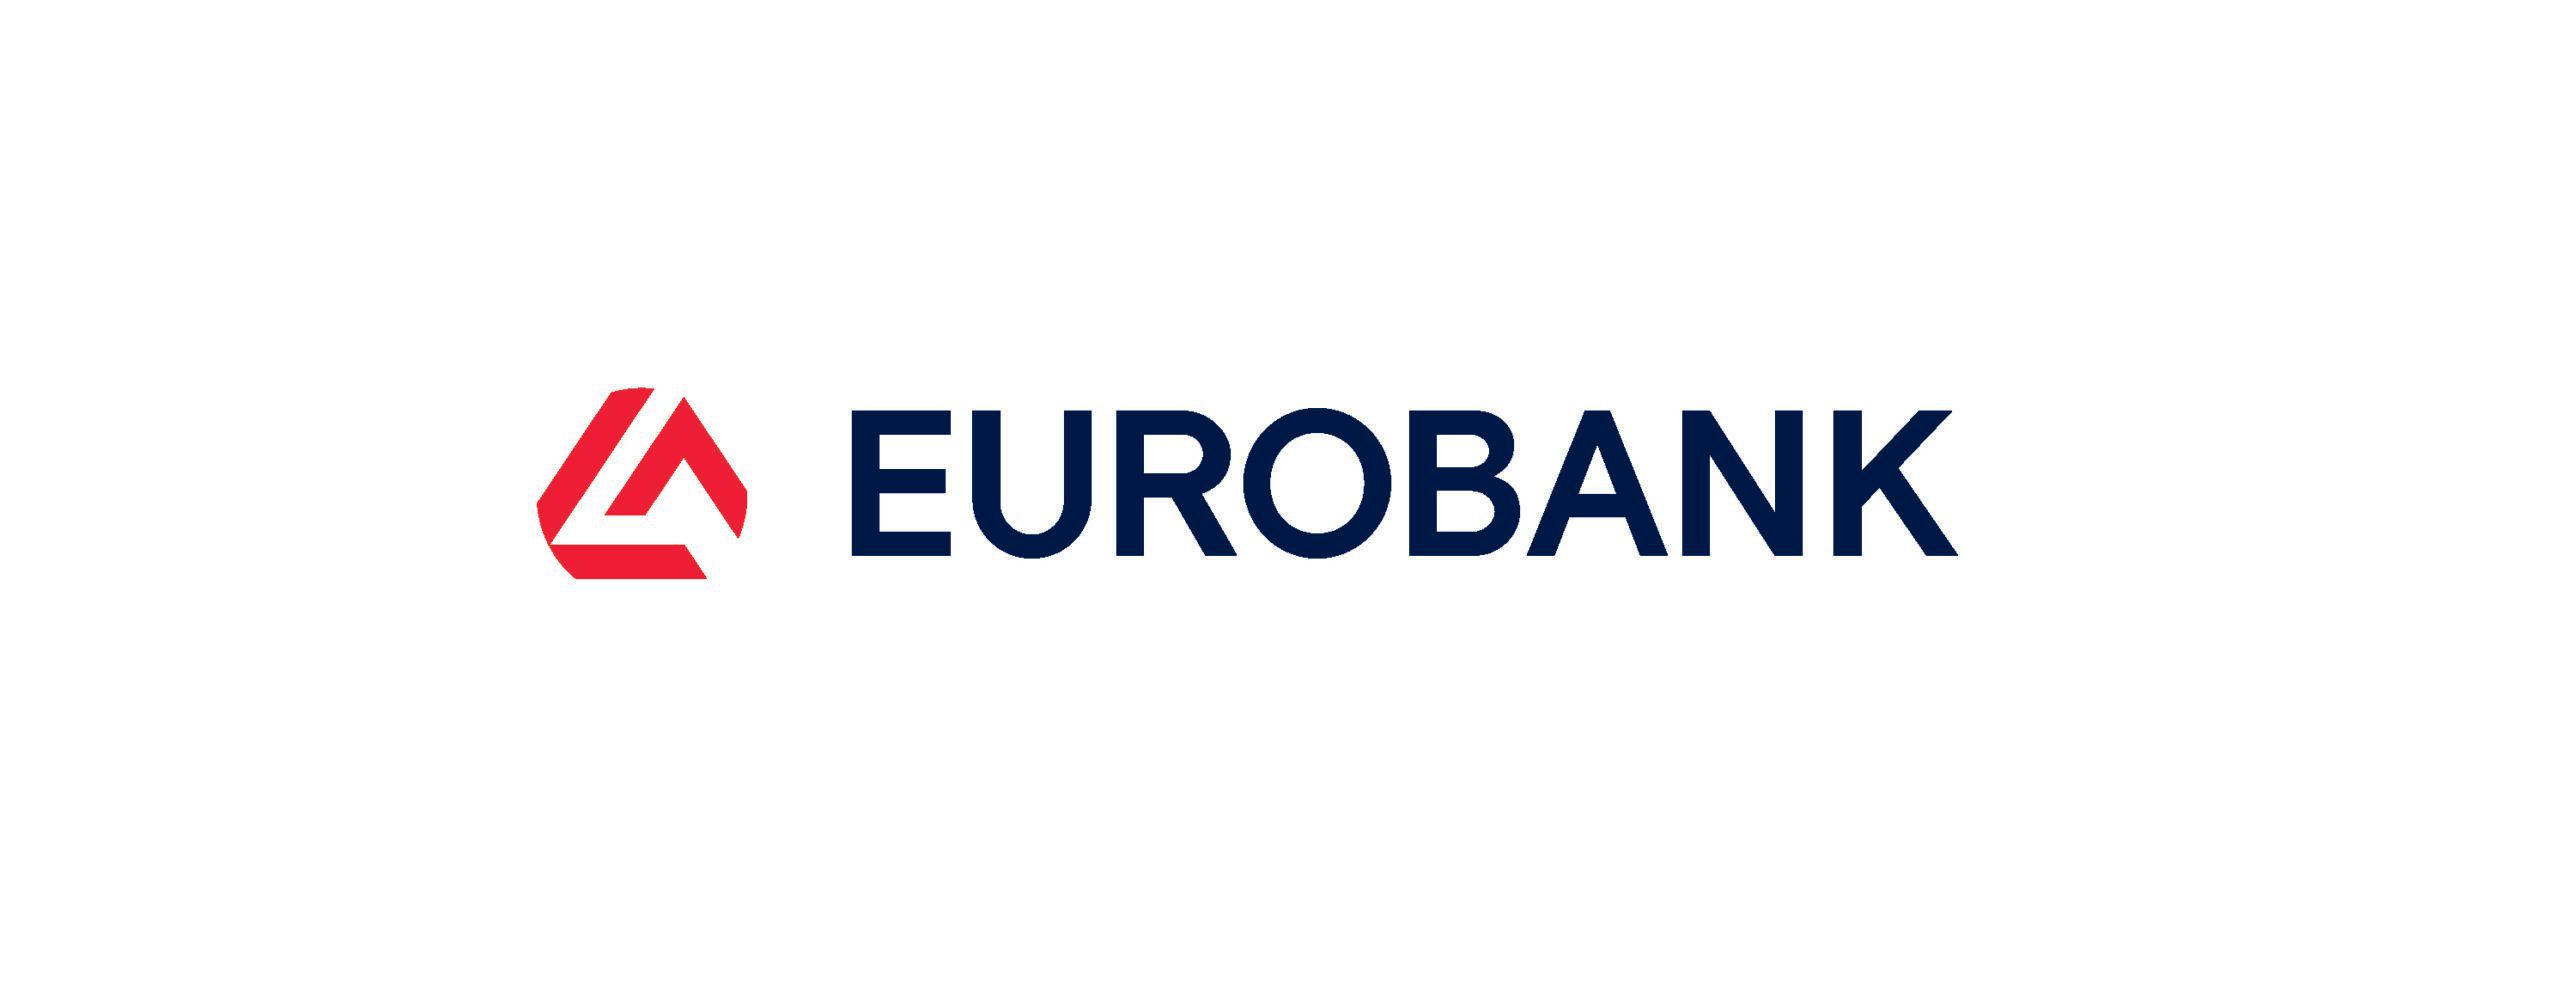 Eurobank-Logo-CMYK_white-scaled.jpg